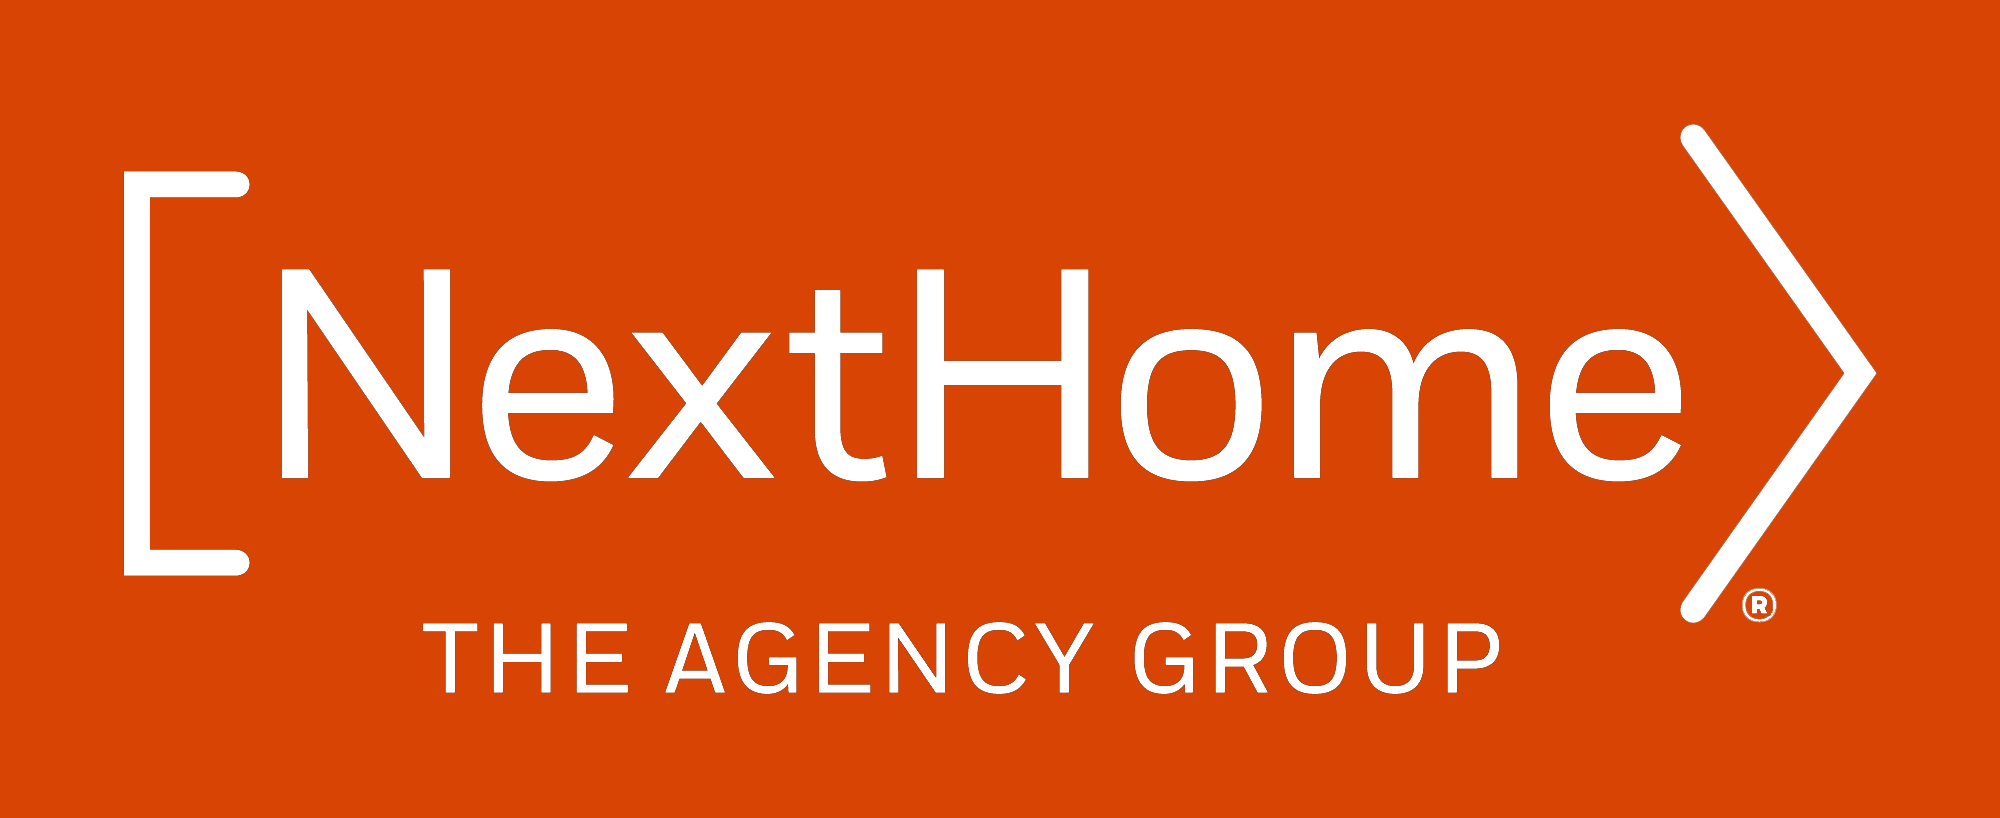 NextHome Logo The Agency Group